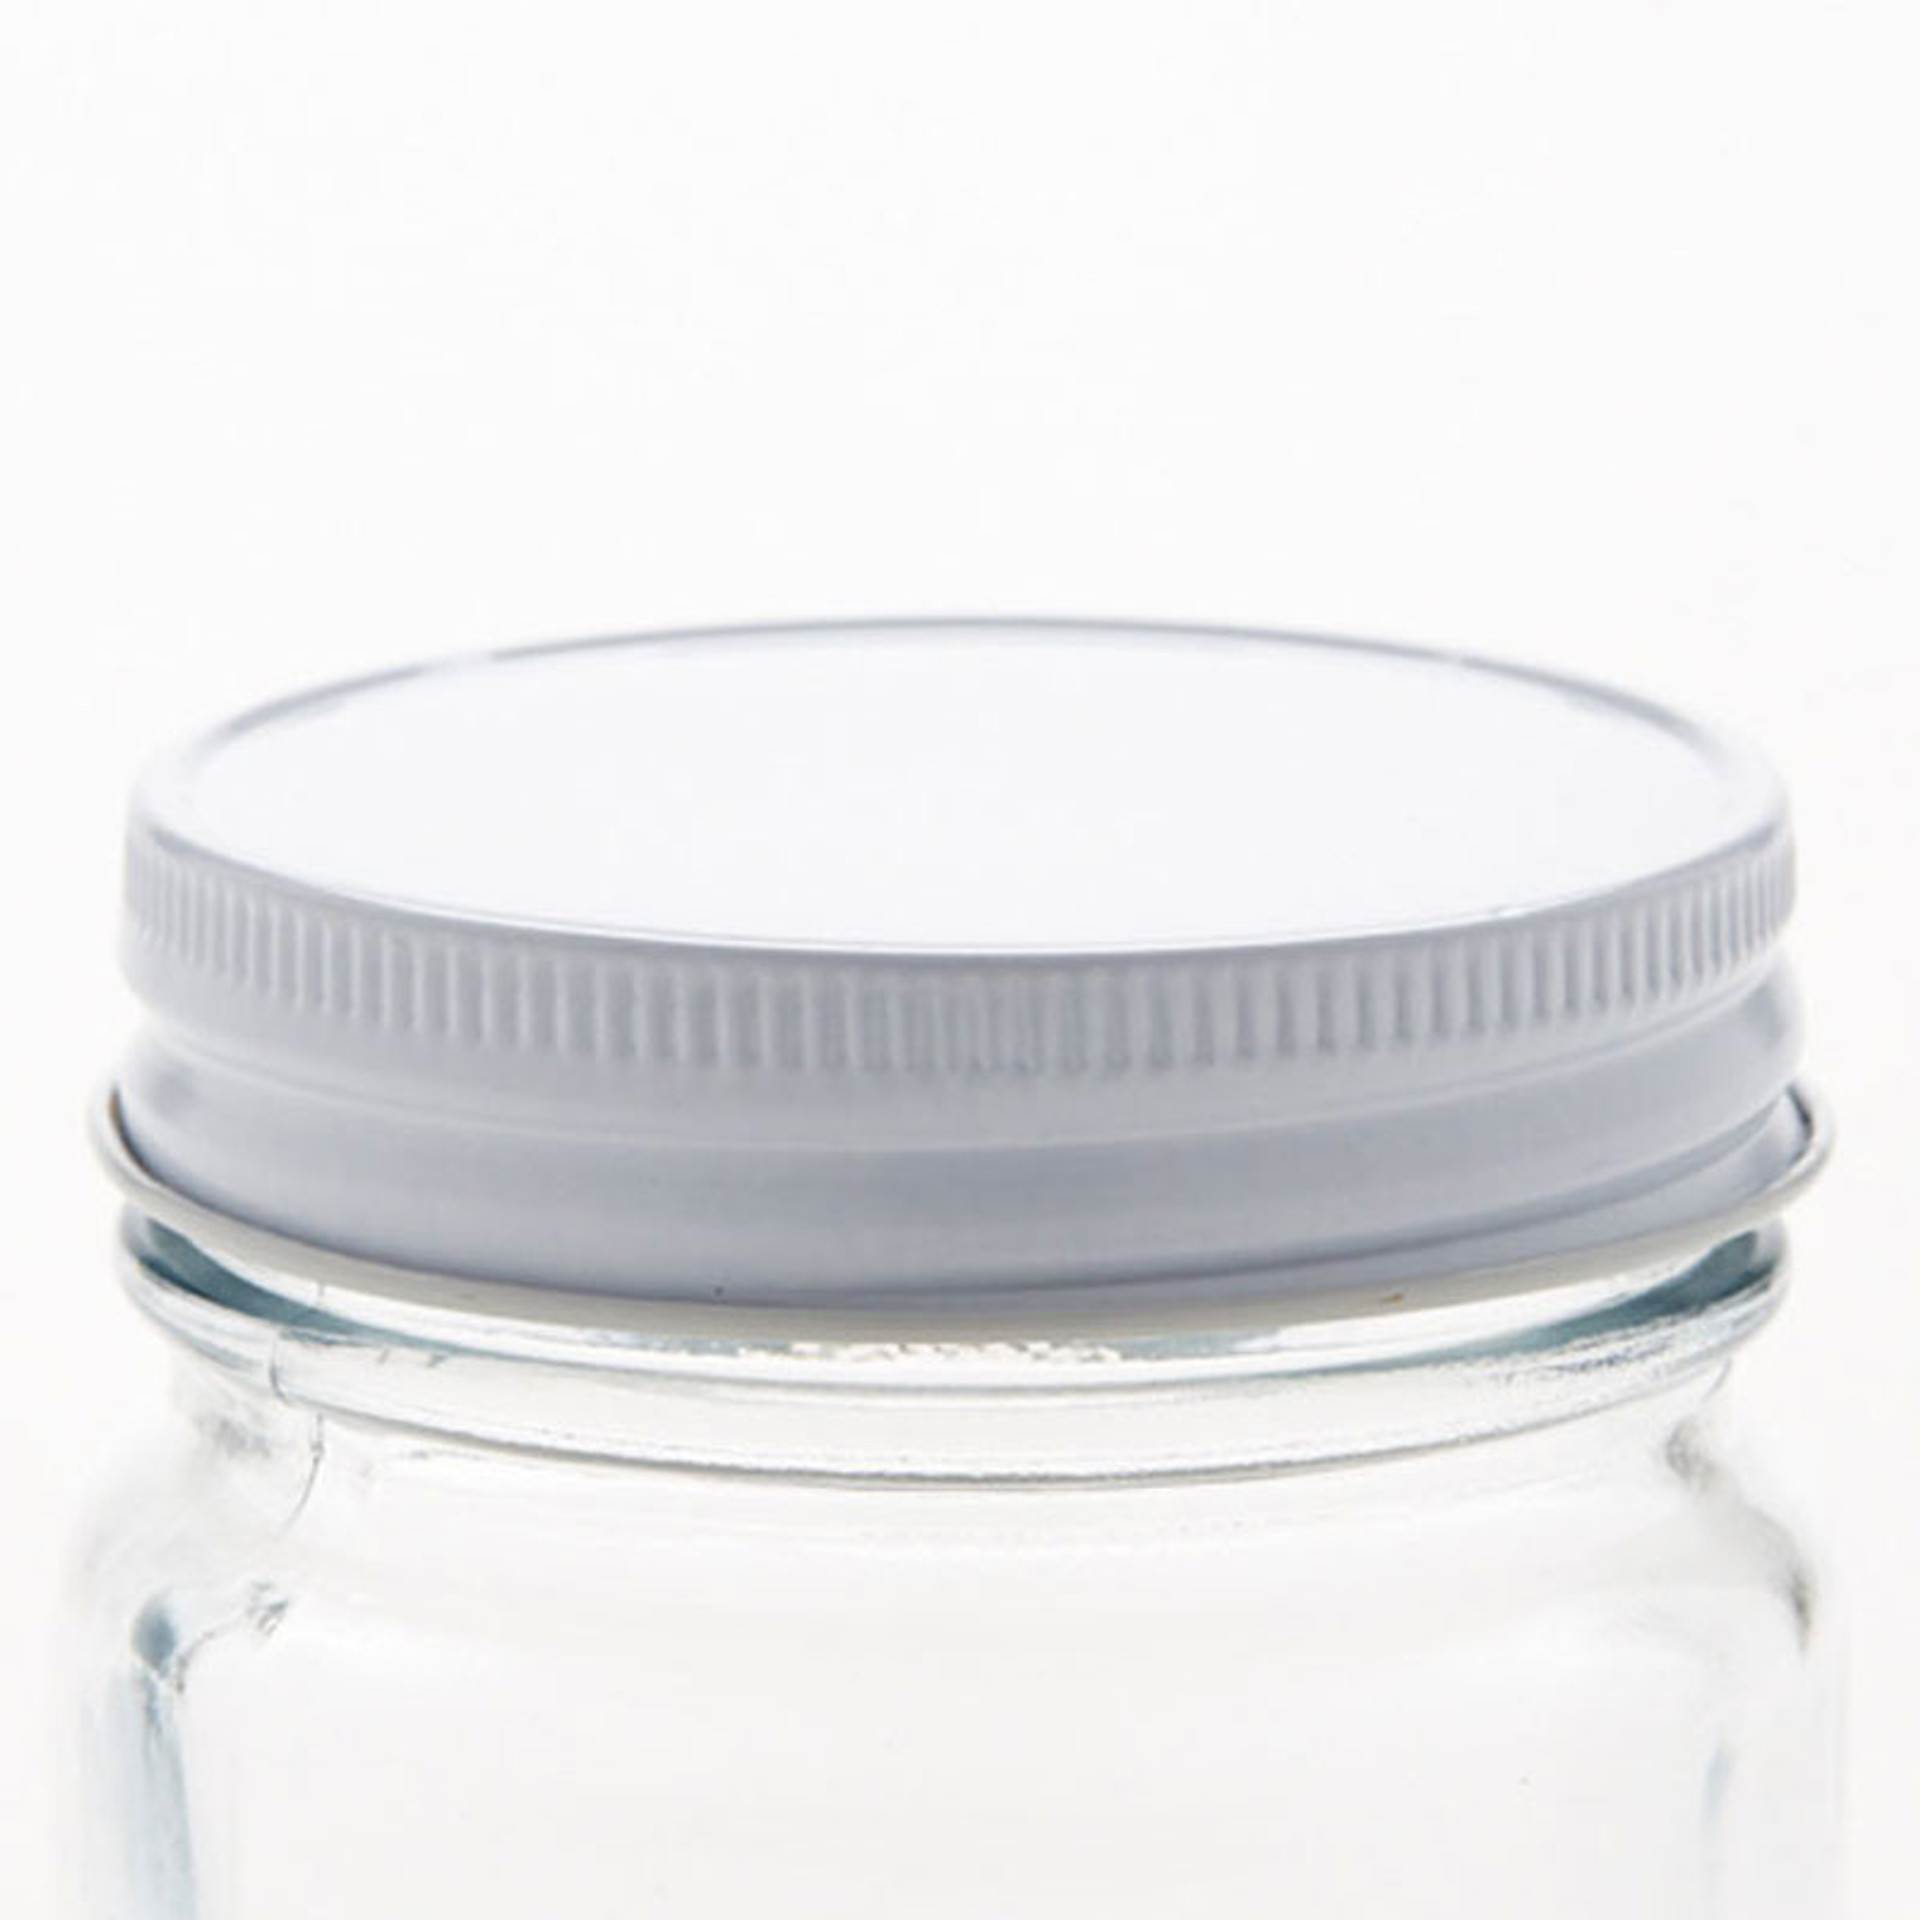 Libbey County Fair Glass Drinking Jars, 16.5-ounce, Set of 12